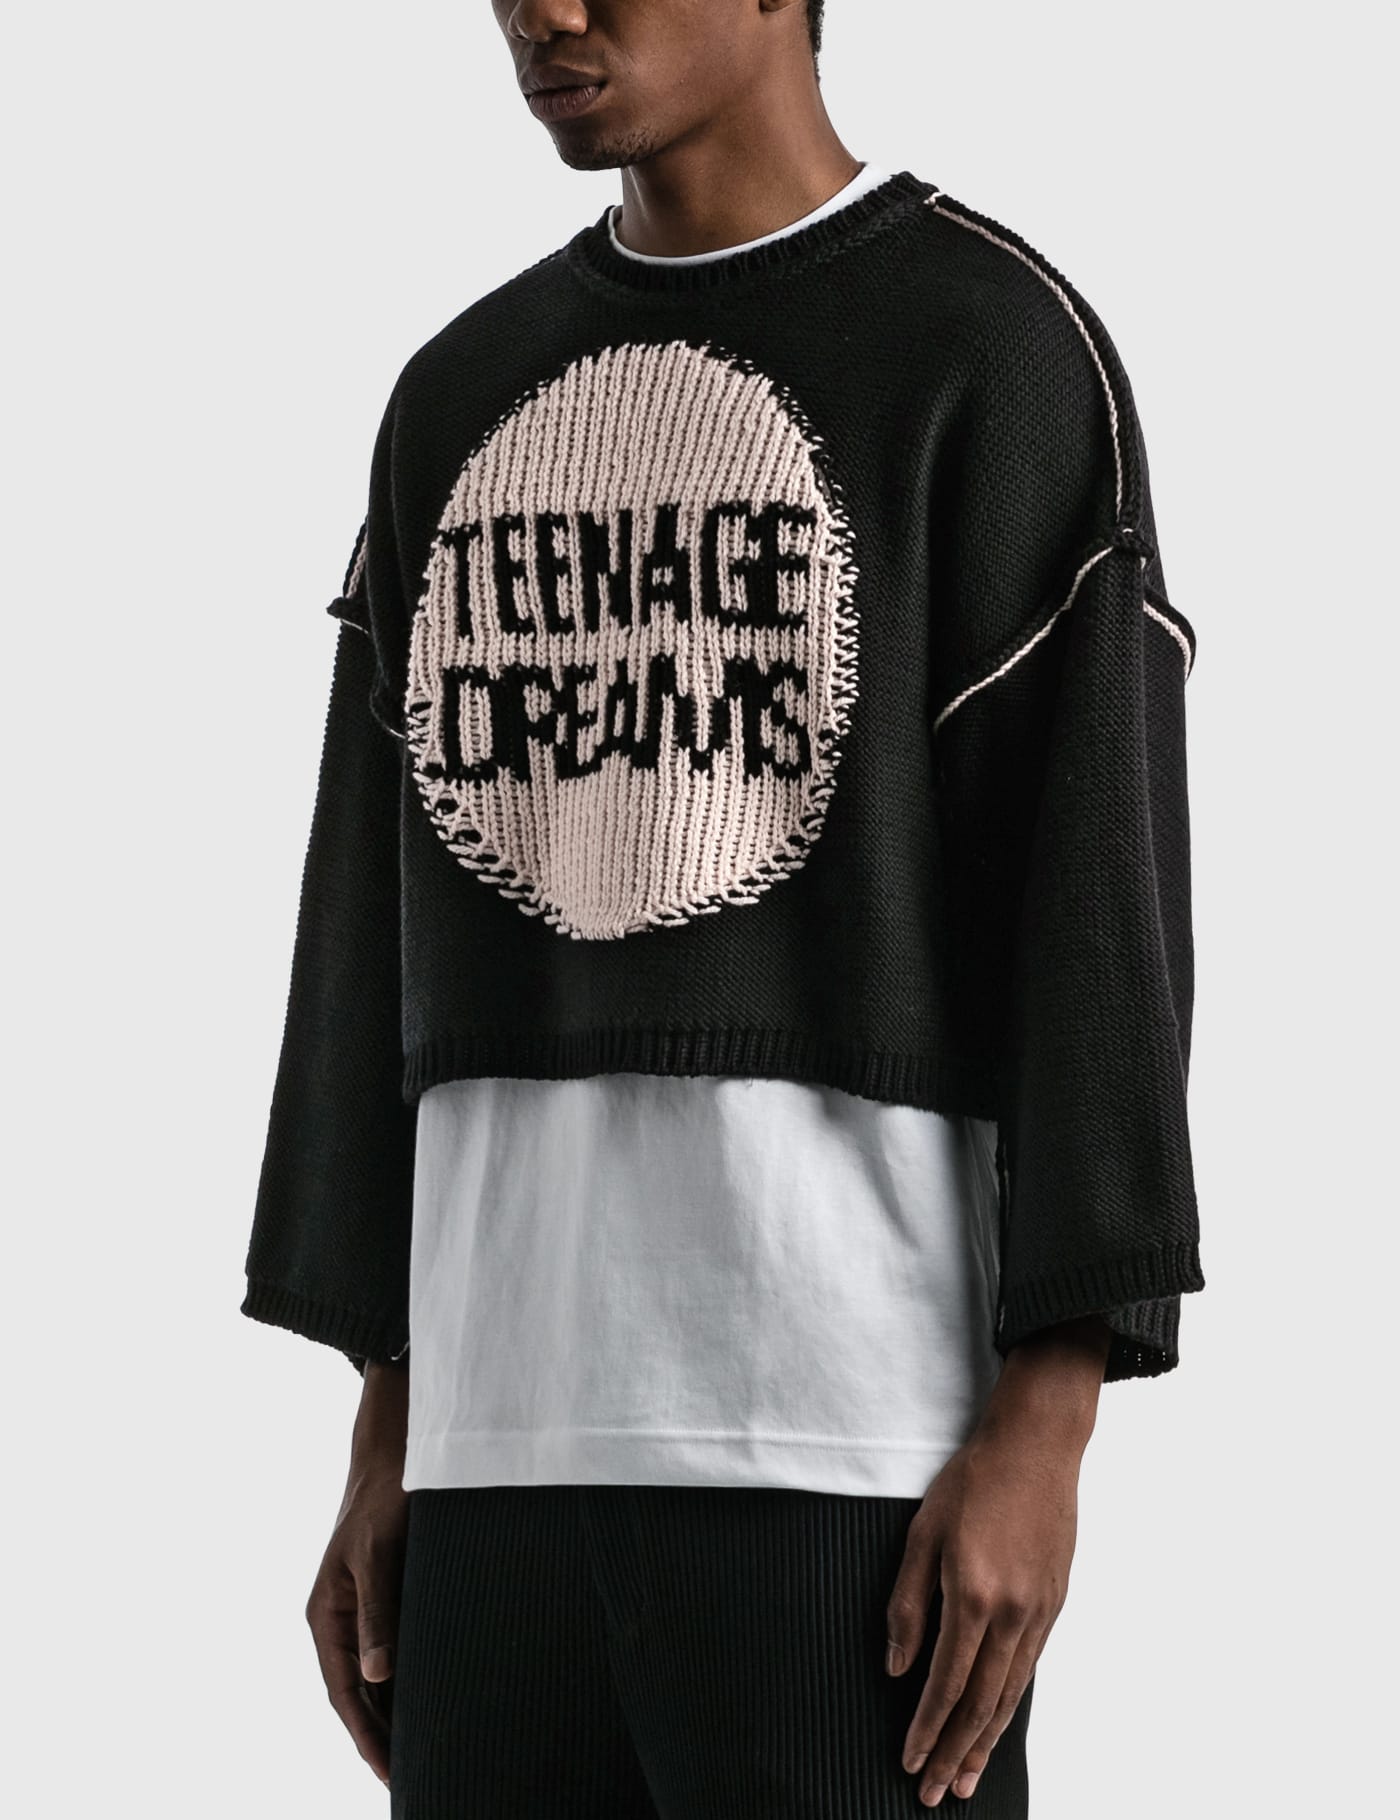 Raf Simons - Teenage Dreams Knitted Sweater | HBX - Globally